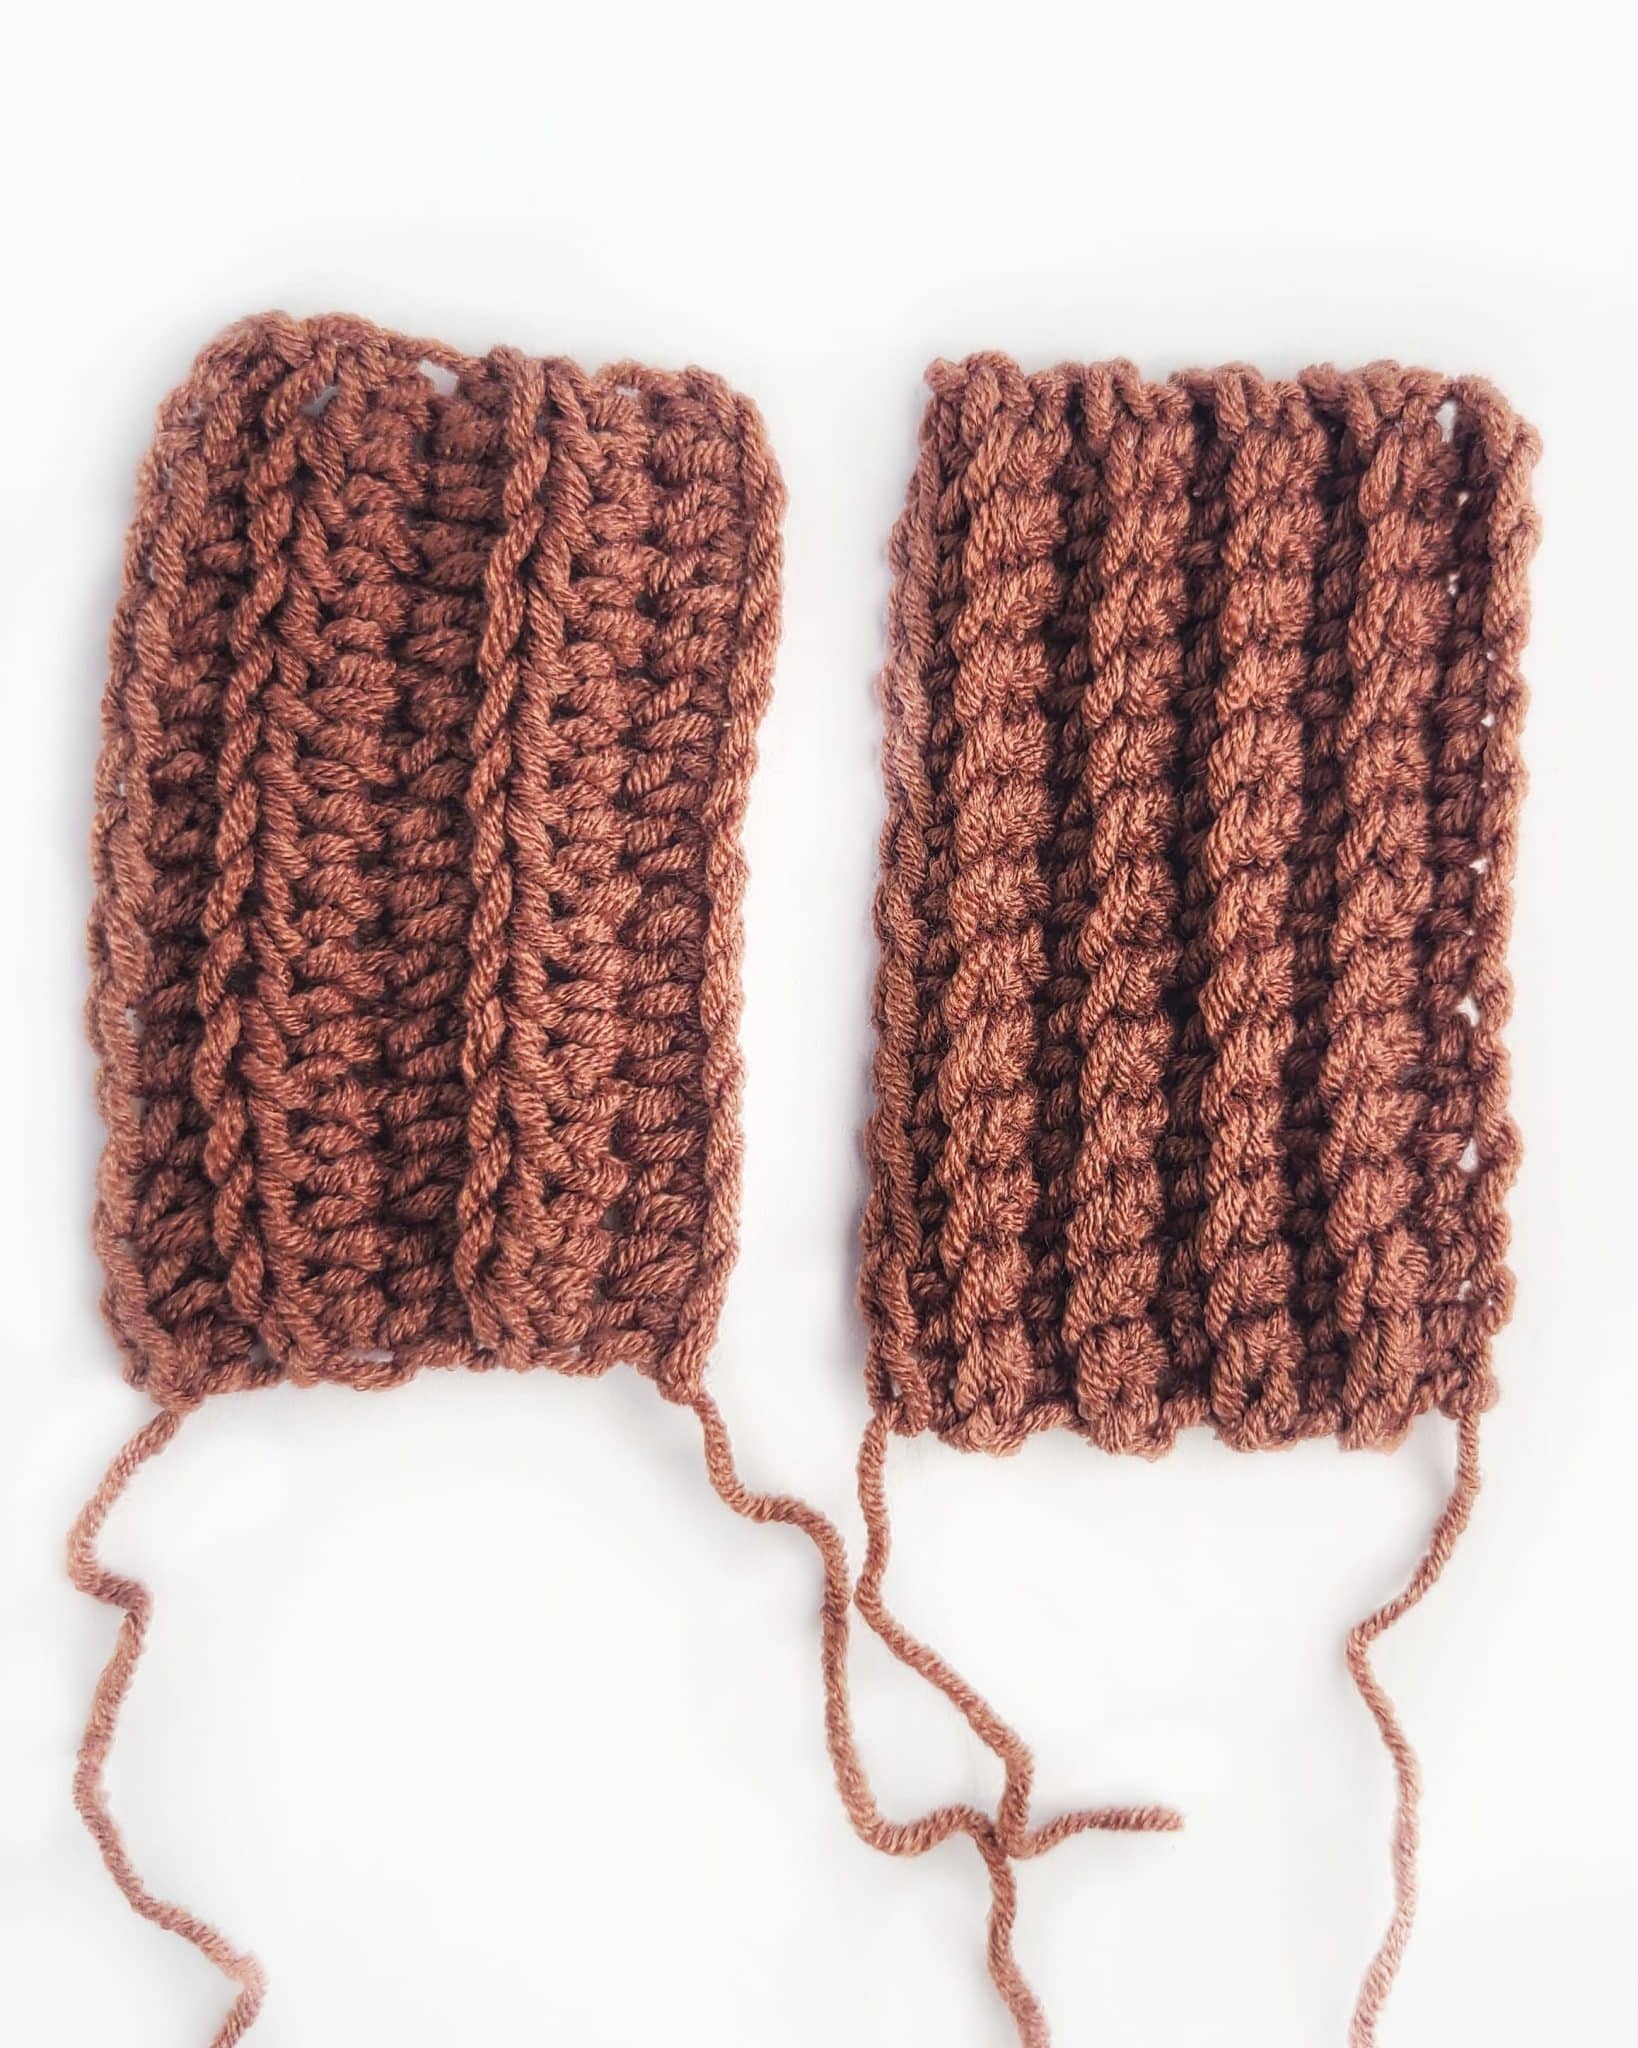 Learn How to Make Crochet Ribbing - Easy Crochet Patterns